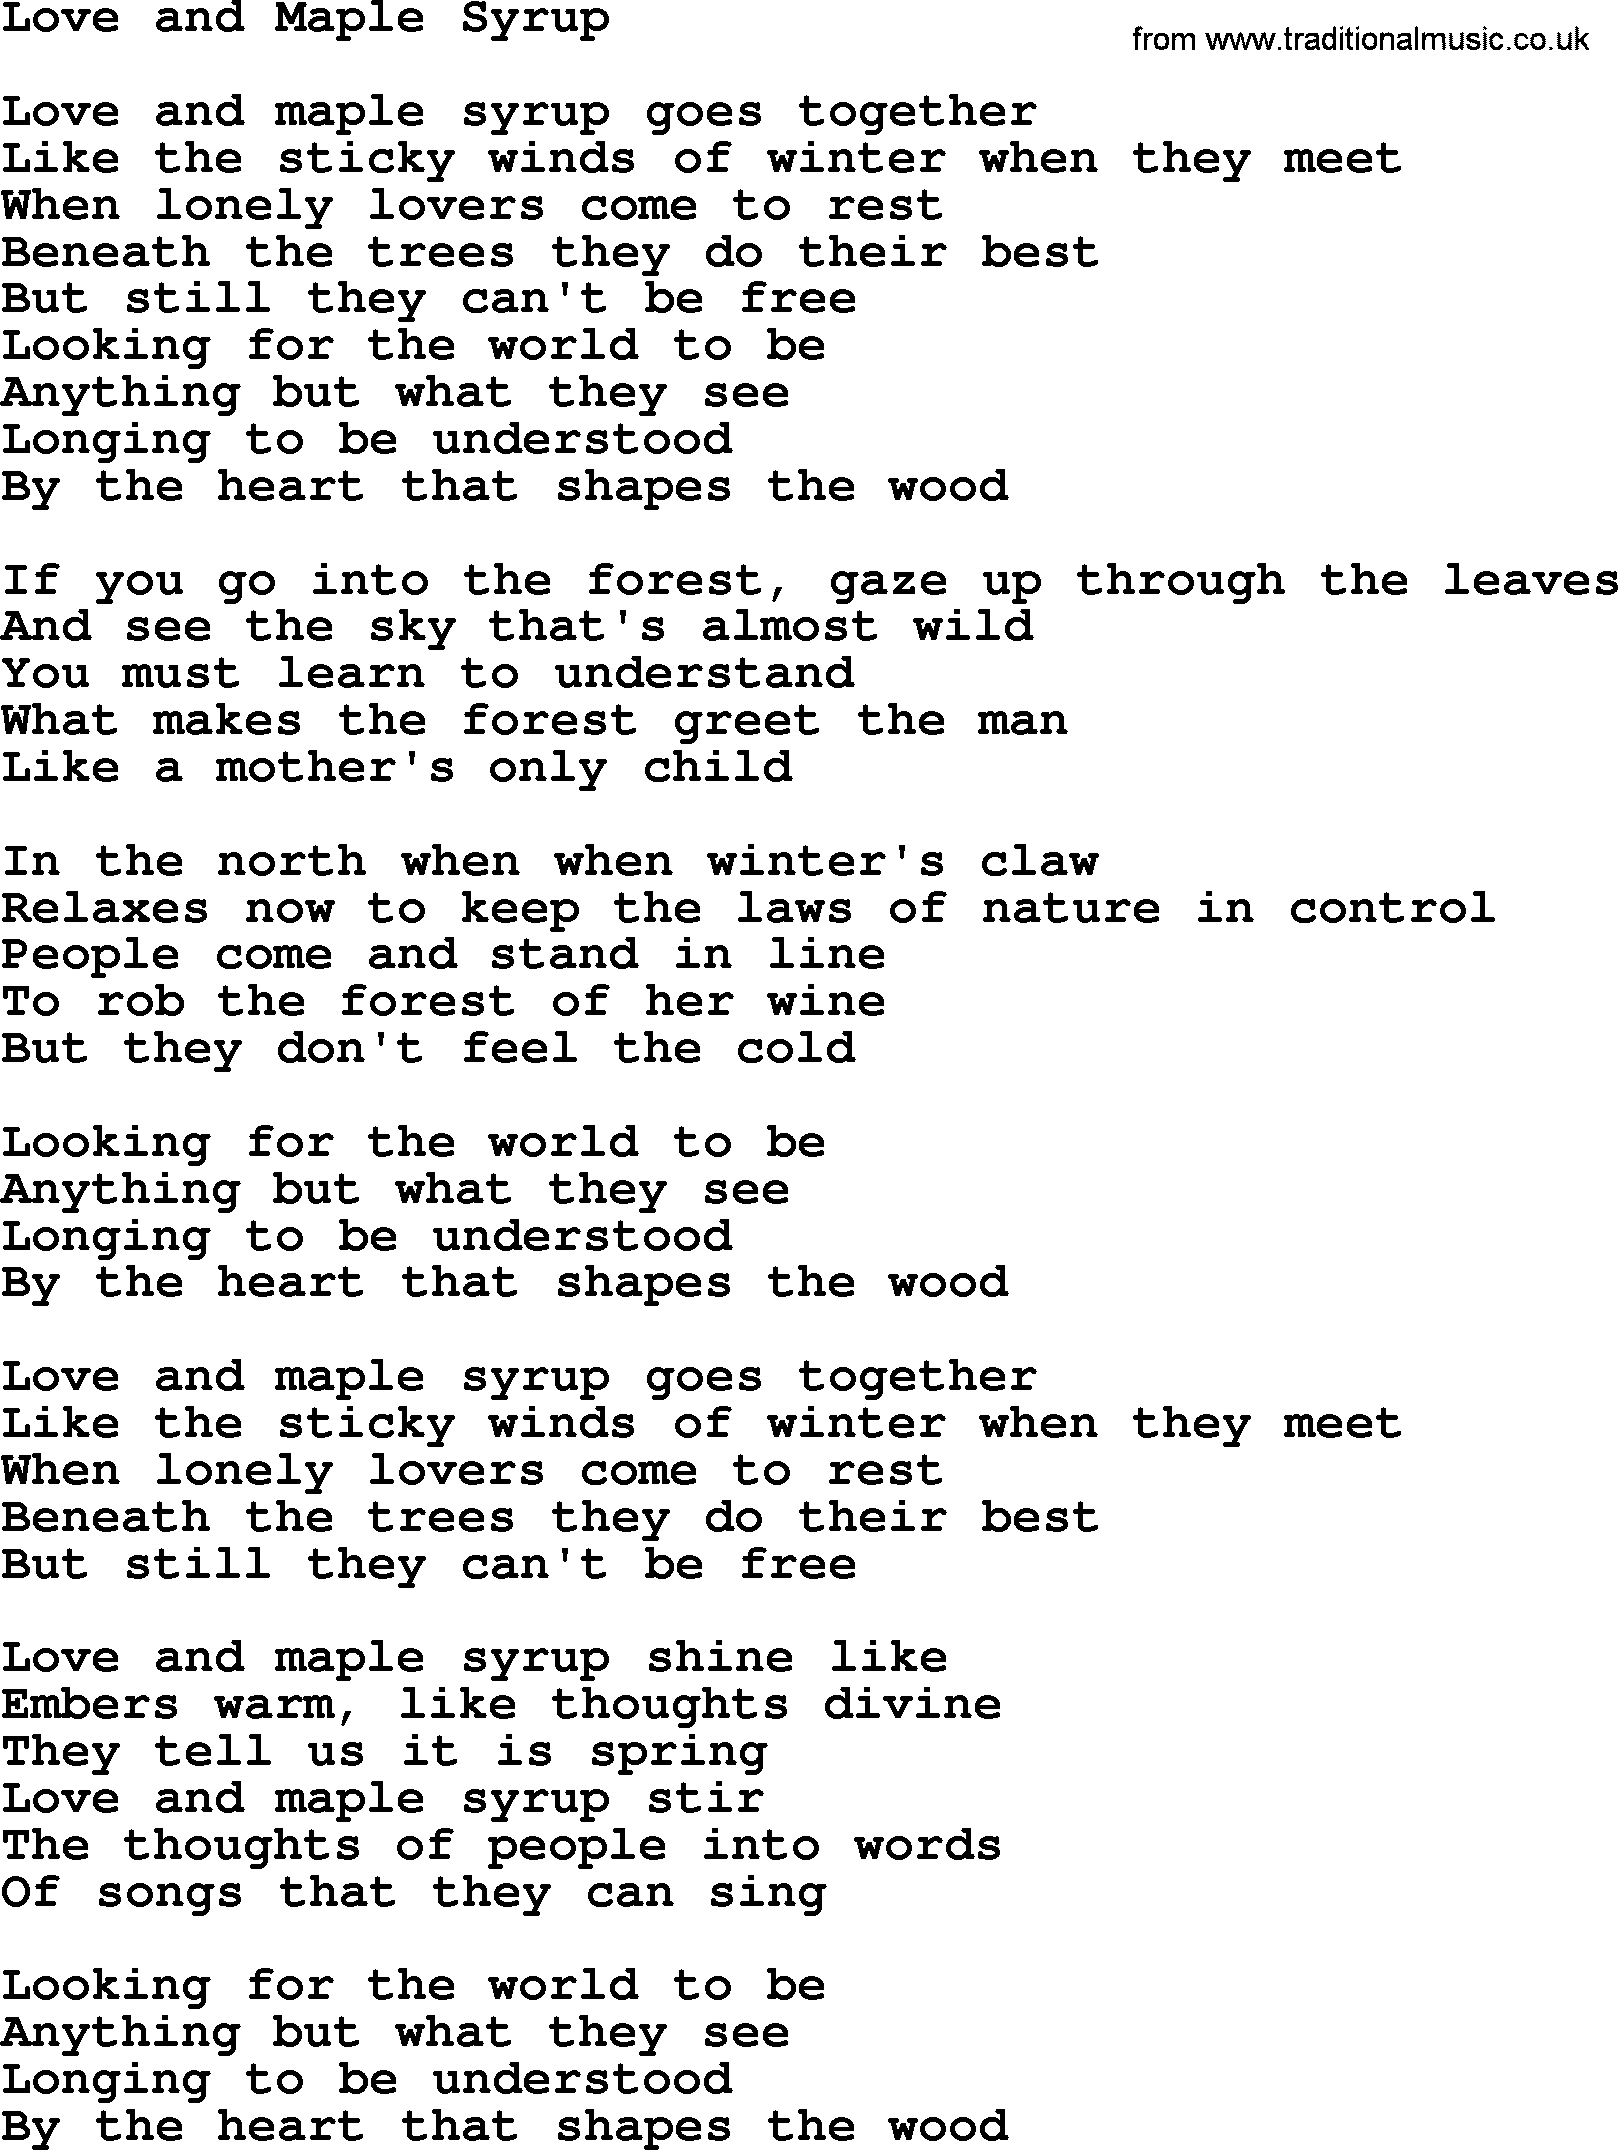 Gordon Lightfoot song Love And Maple Syrup, lyrics